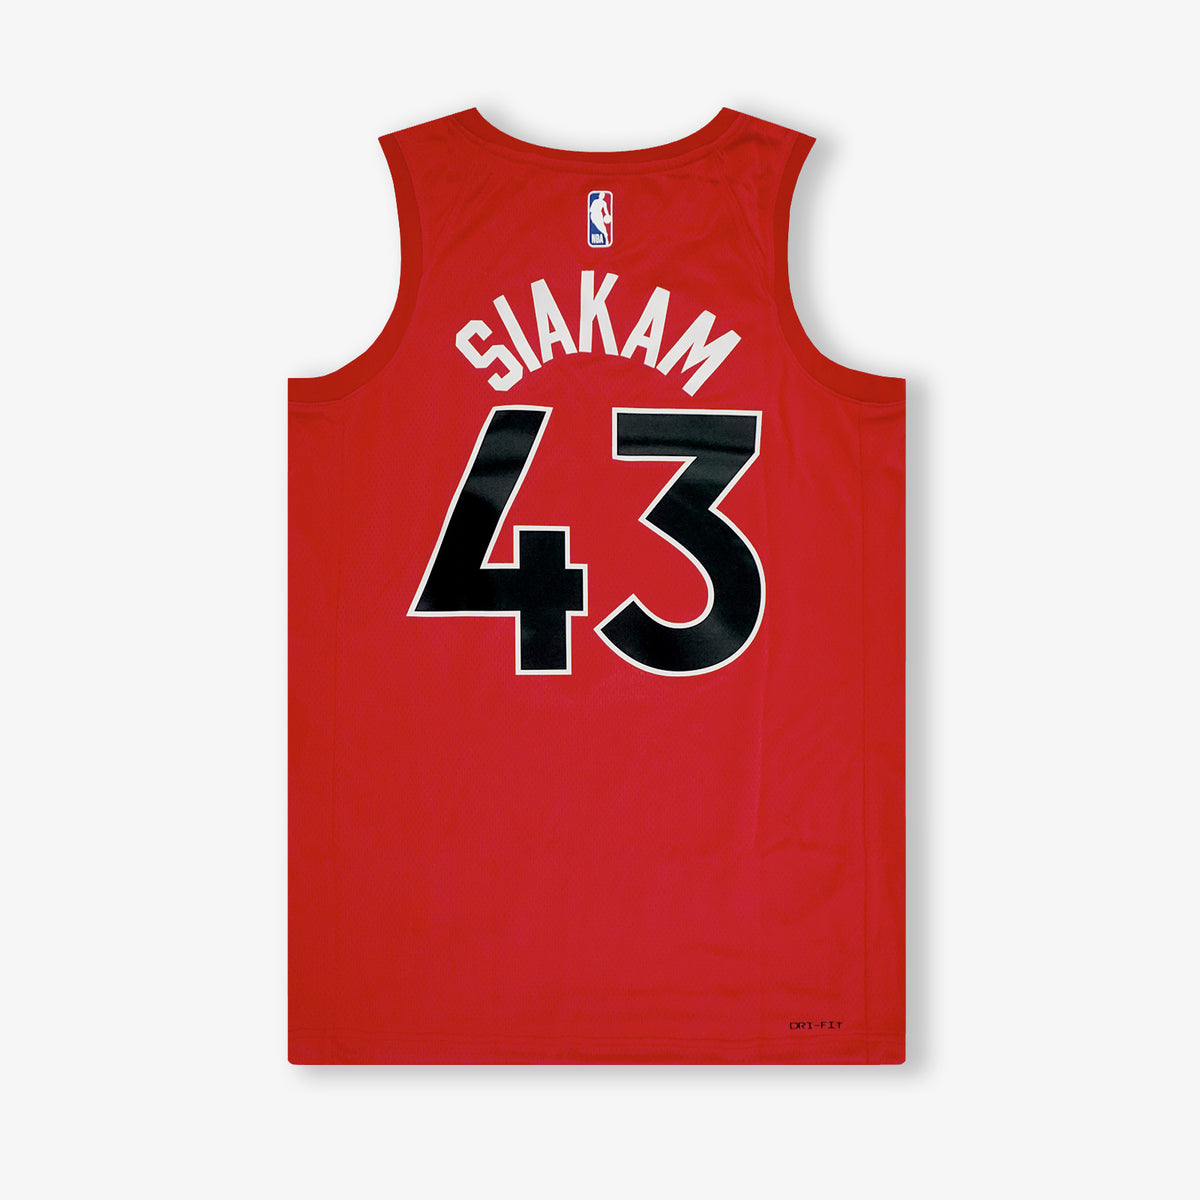 Pascal Siakam Toronto Raptors Nike Youth Swingman Jersey - Icon Edition Red